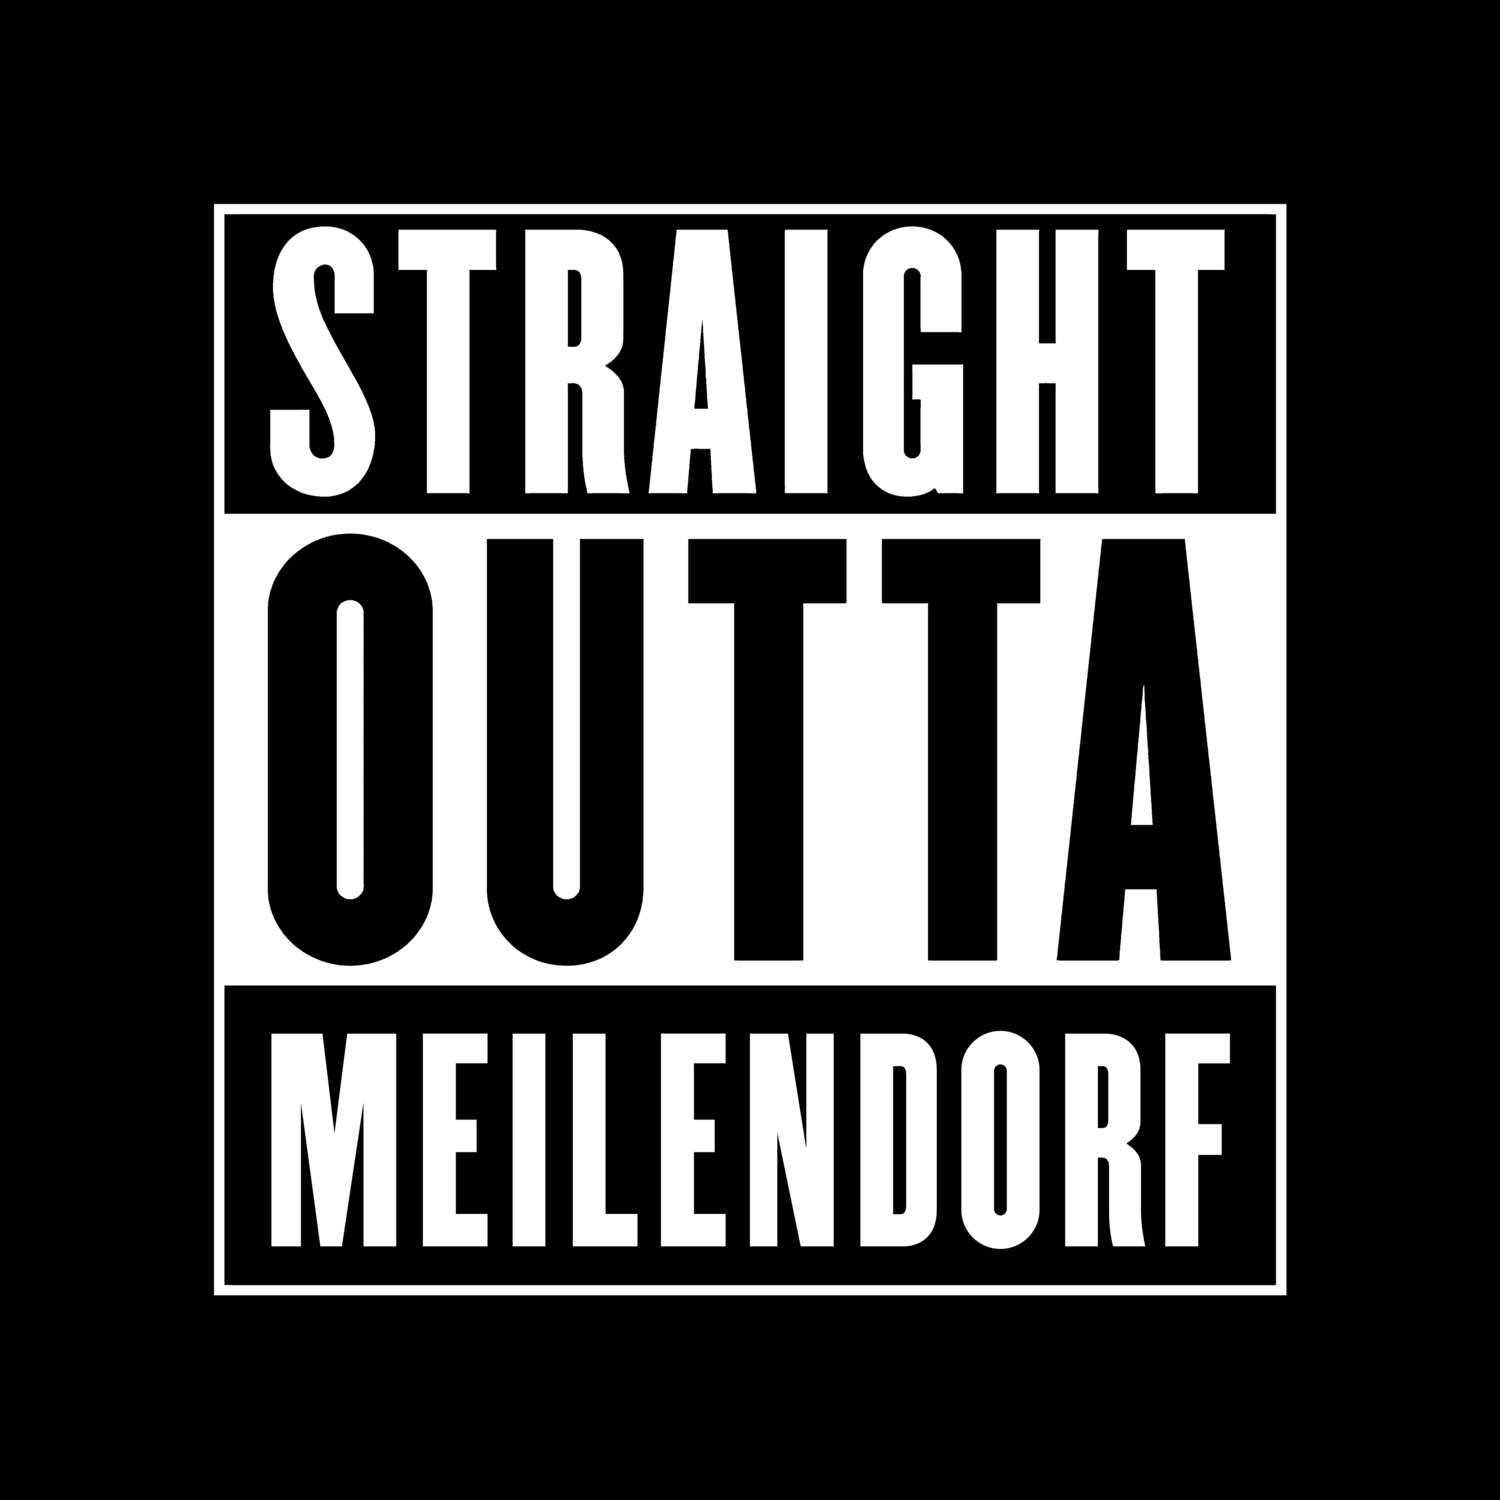 Meilendorf T-Shirt »Straight Outta«